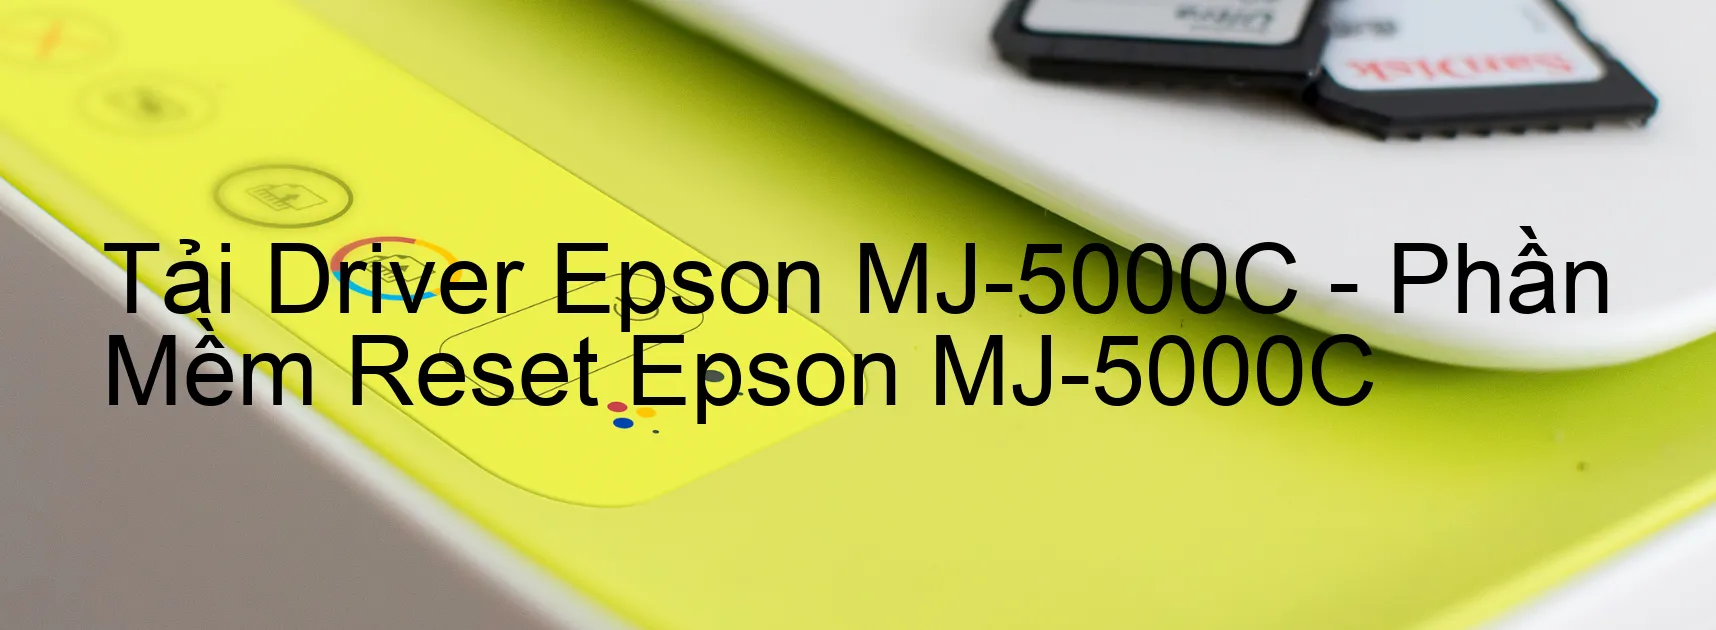 Driver Epson MJ-5000C, Phần Mềm Reset Epson MJ-5000C